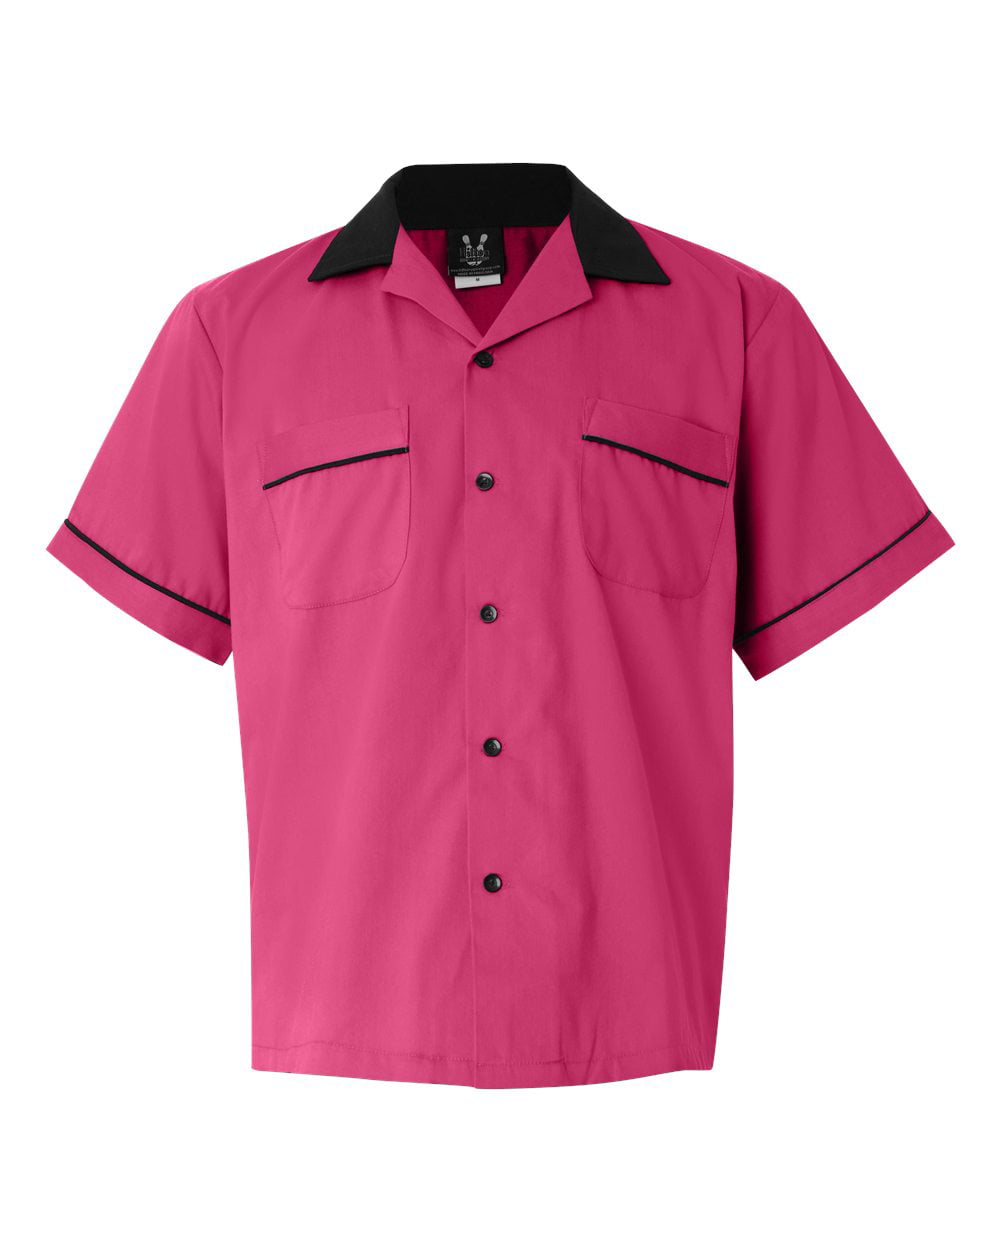 Hilton Apparel GM Legend Bowling Shirt HP2244 S-3XL NEW Mens or Womens 